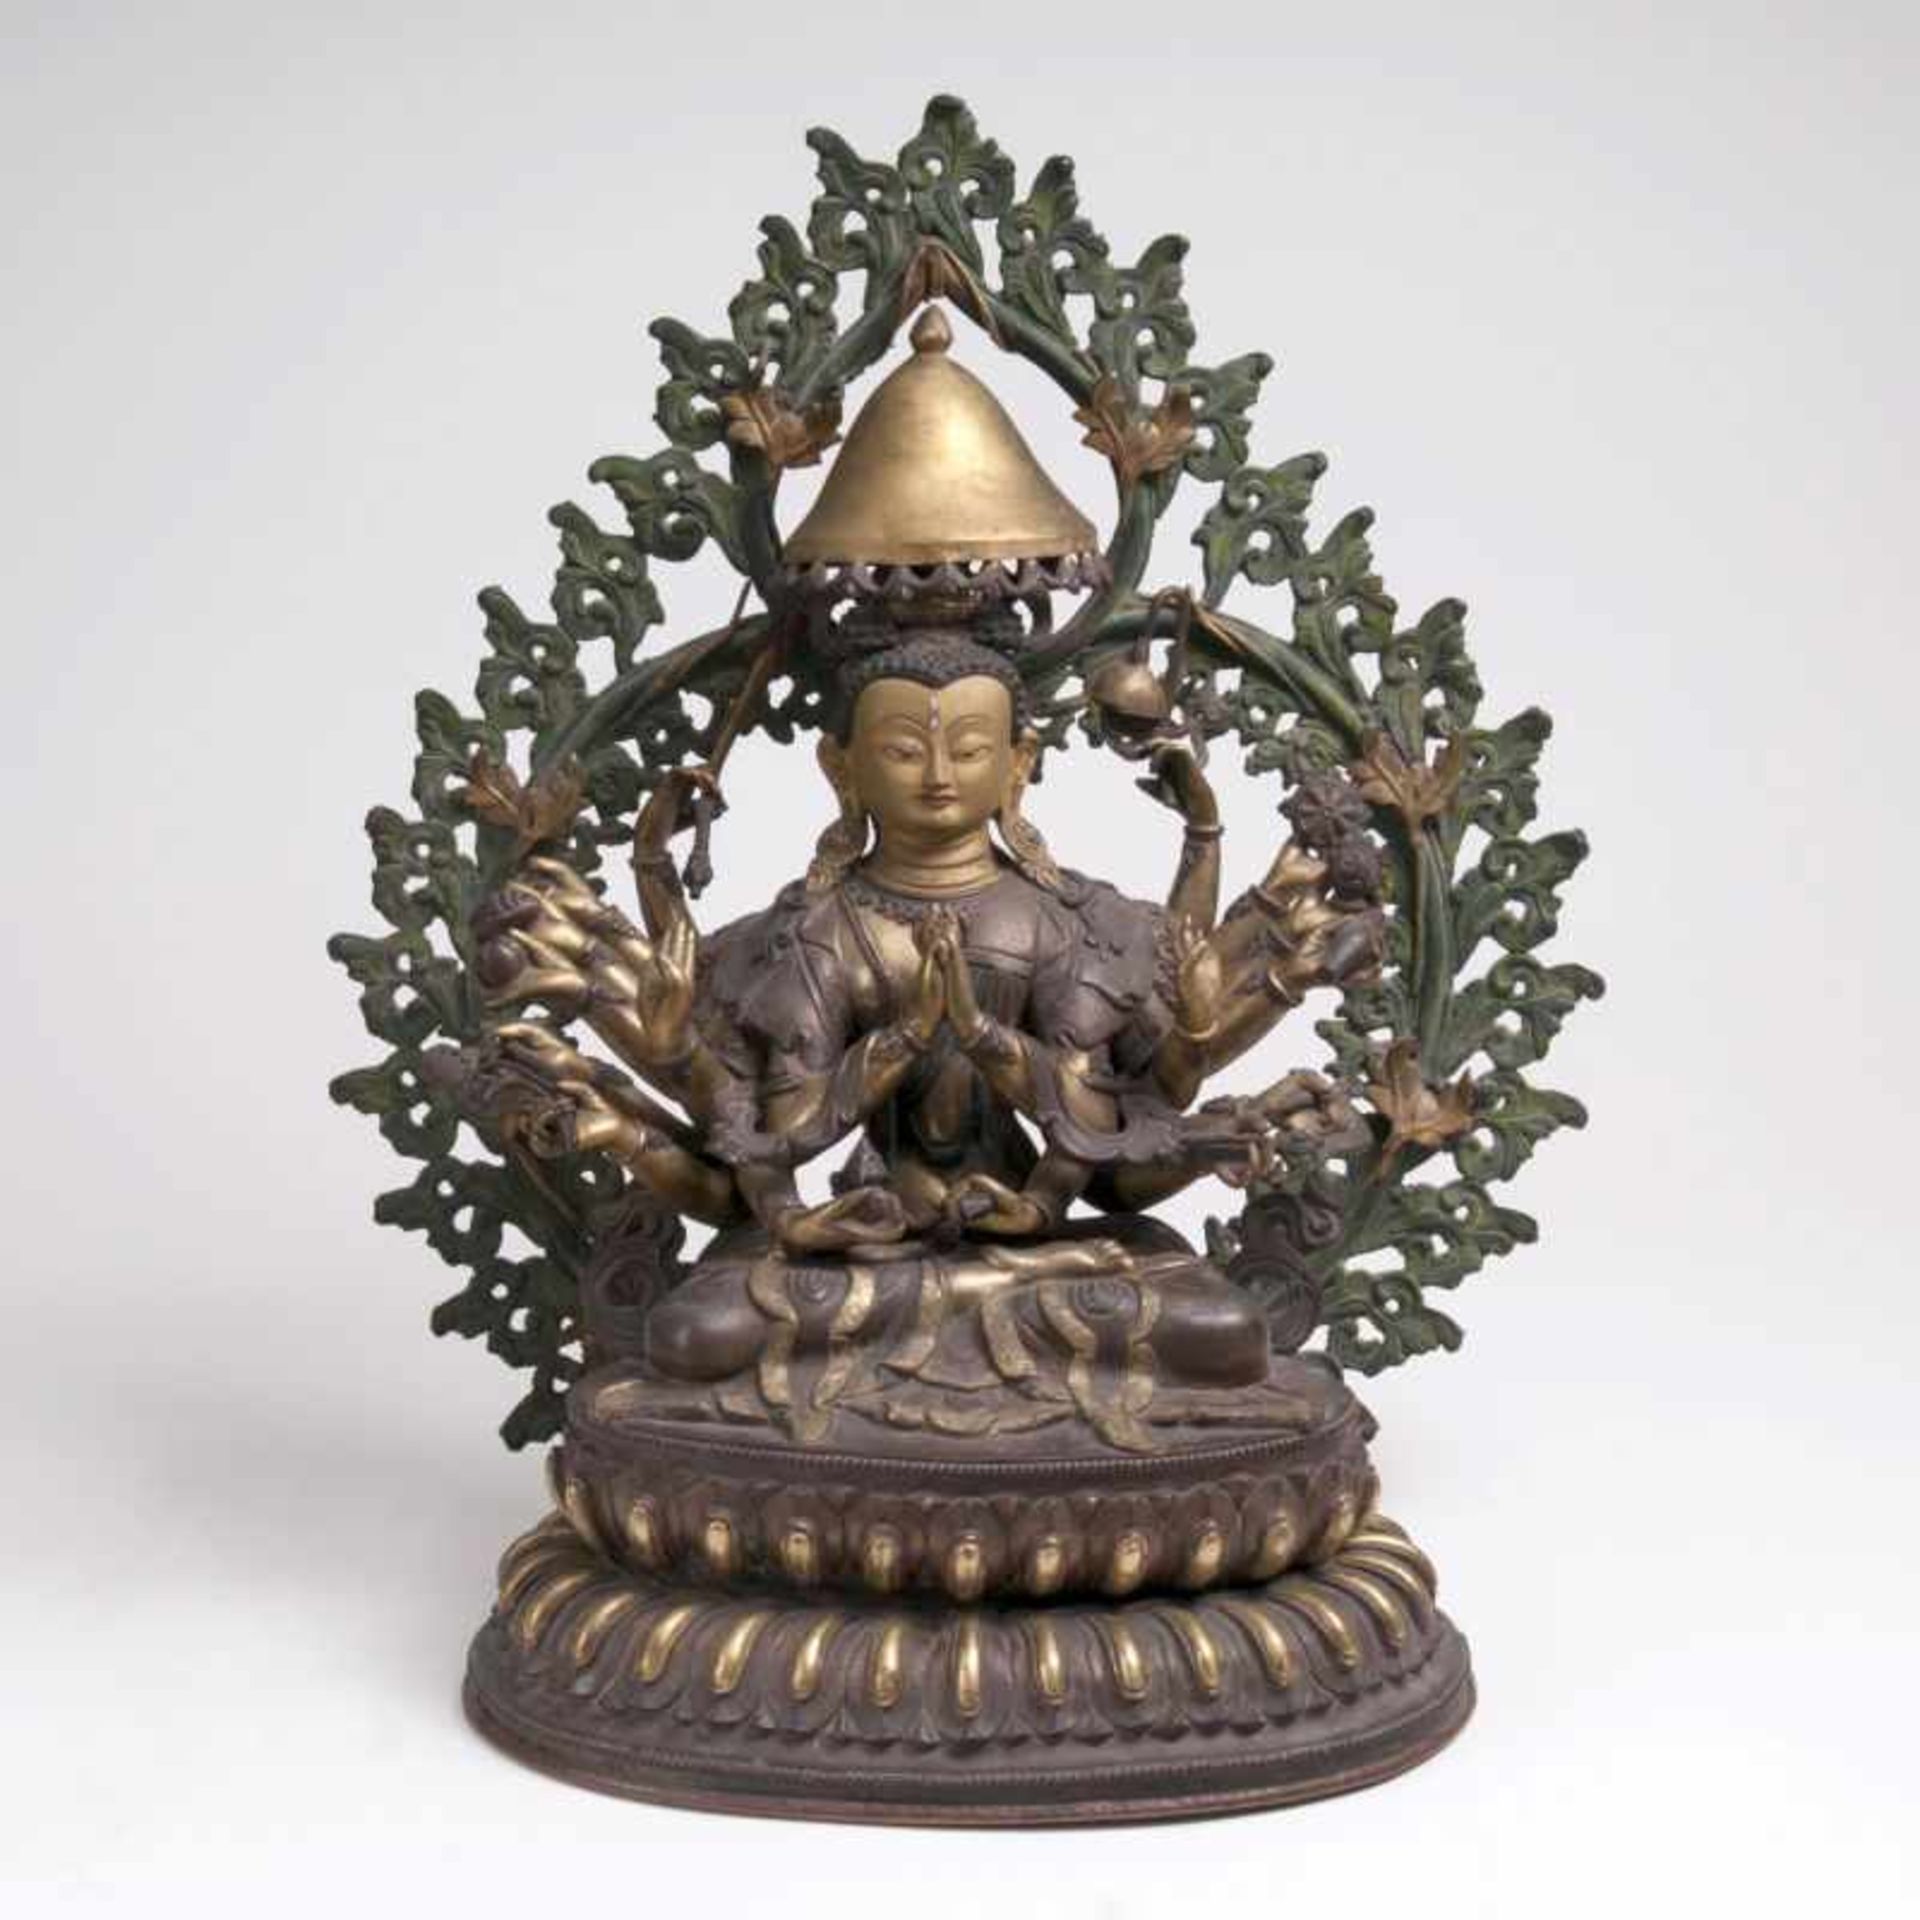 Imposante Skulptur der Göttin Cundi Tibet, frühes 20. Jh. Kupferbronze, partiell feuervergoldet,